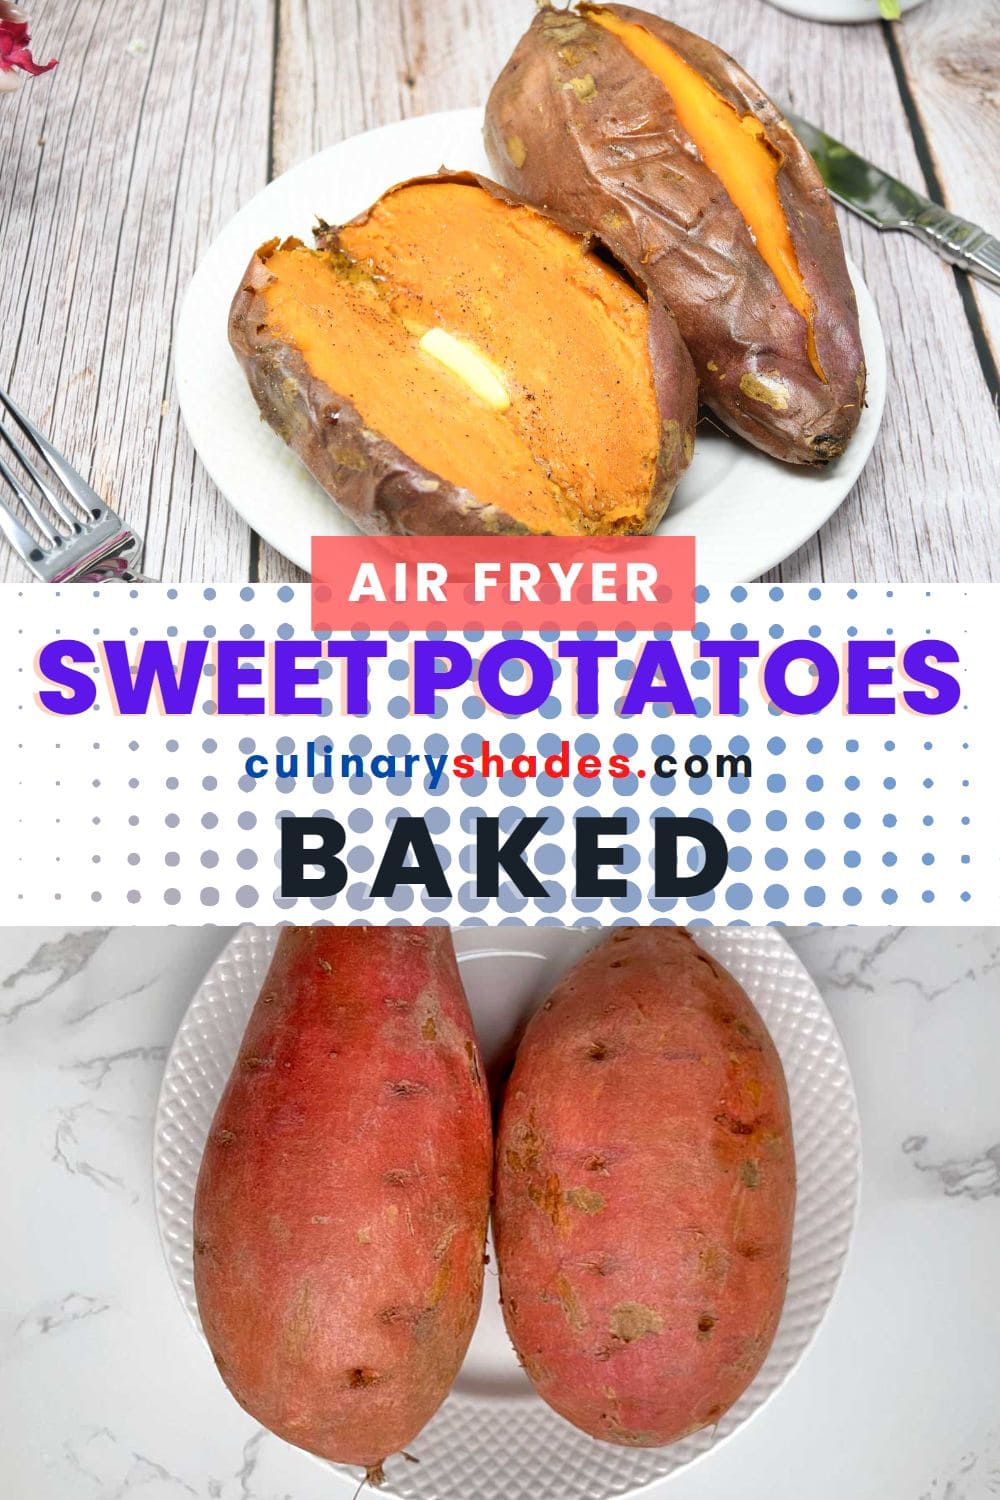 Air fryer whole sweet potatoes pin.